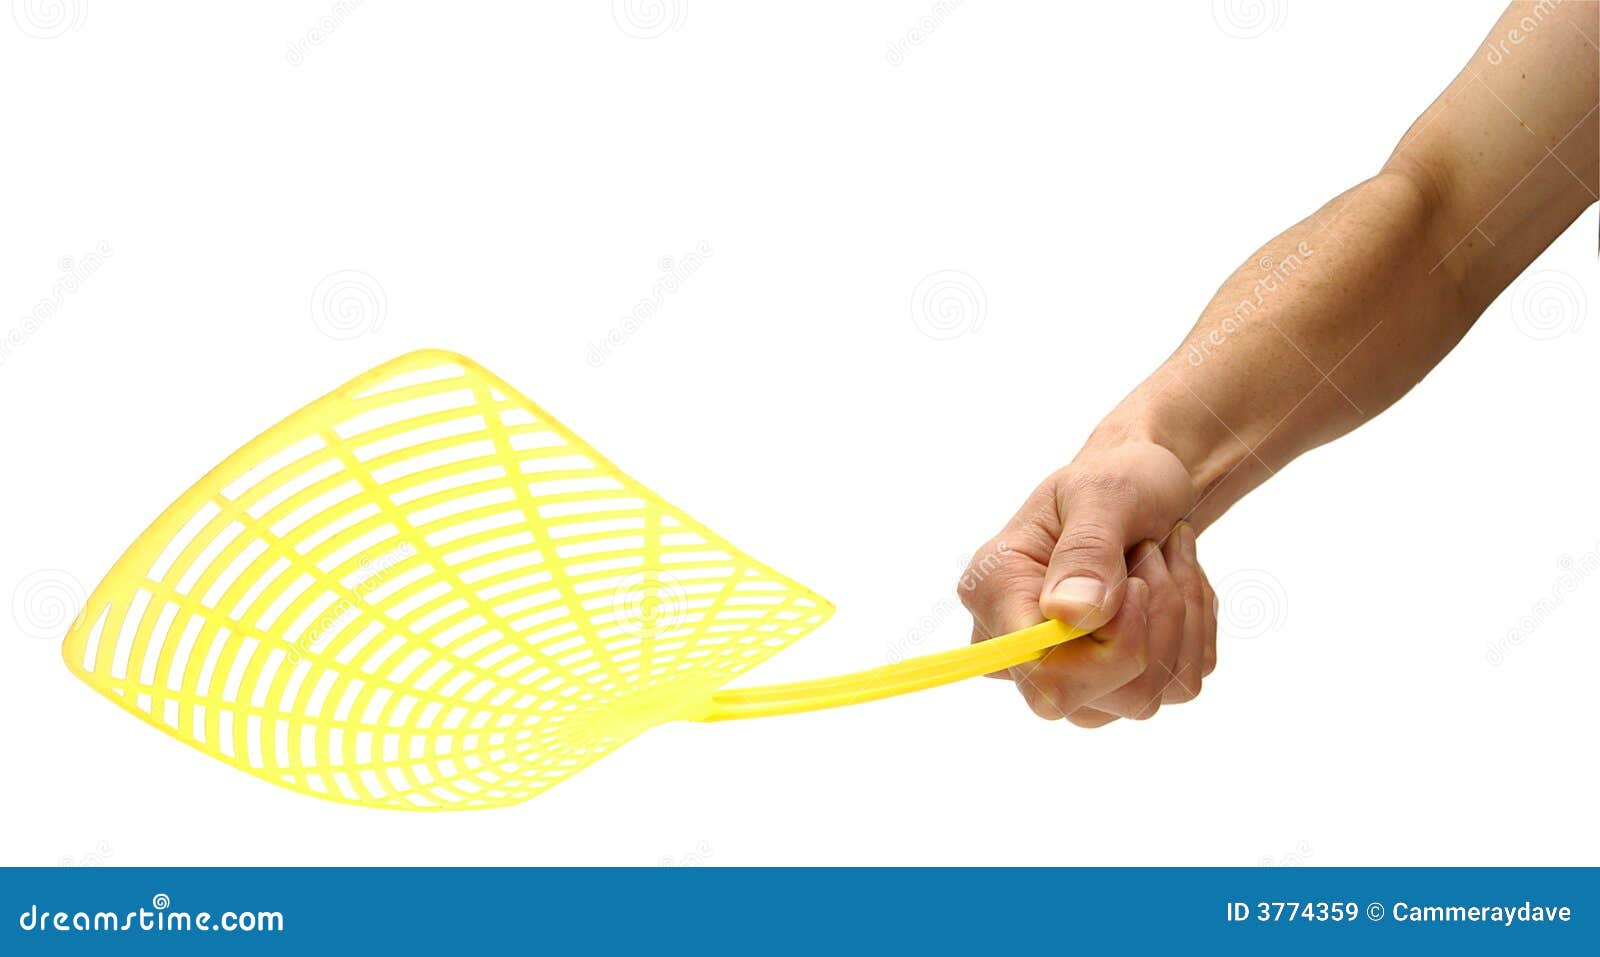 fly swatter clip art - photo #38